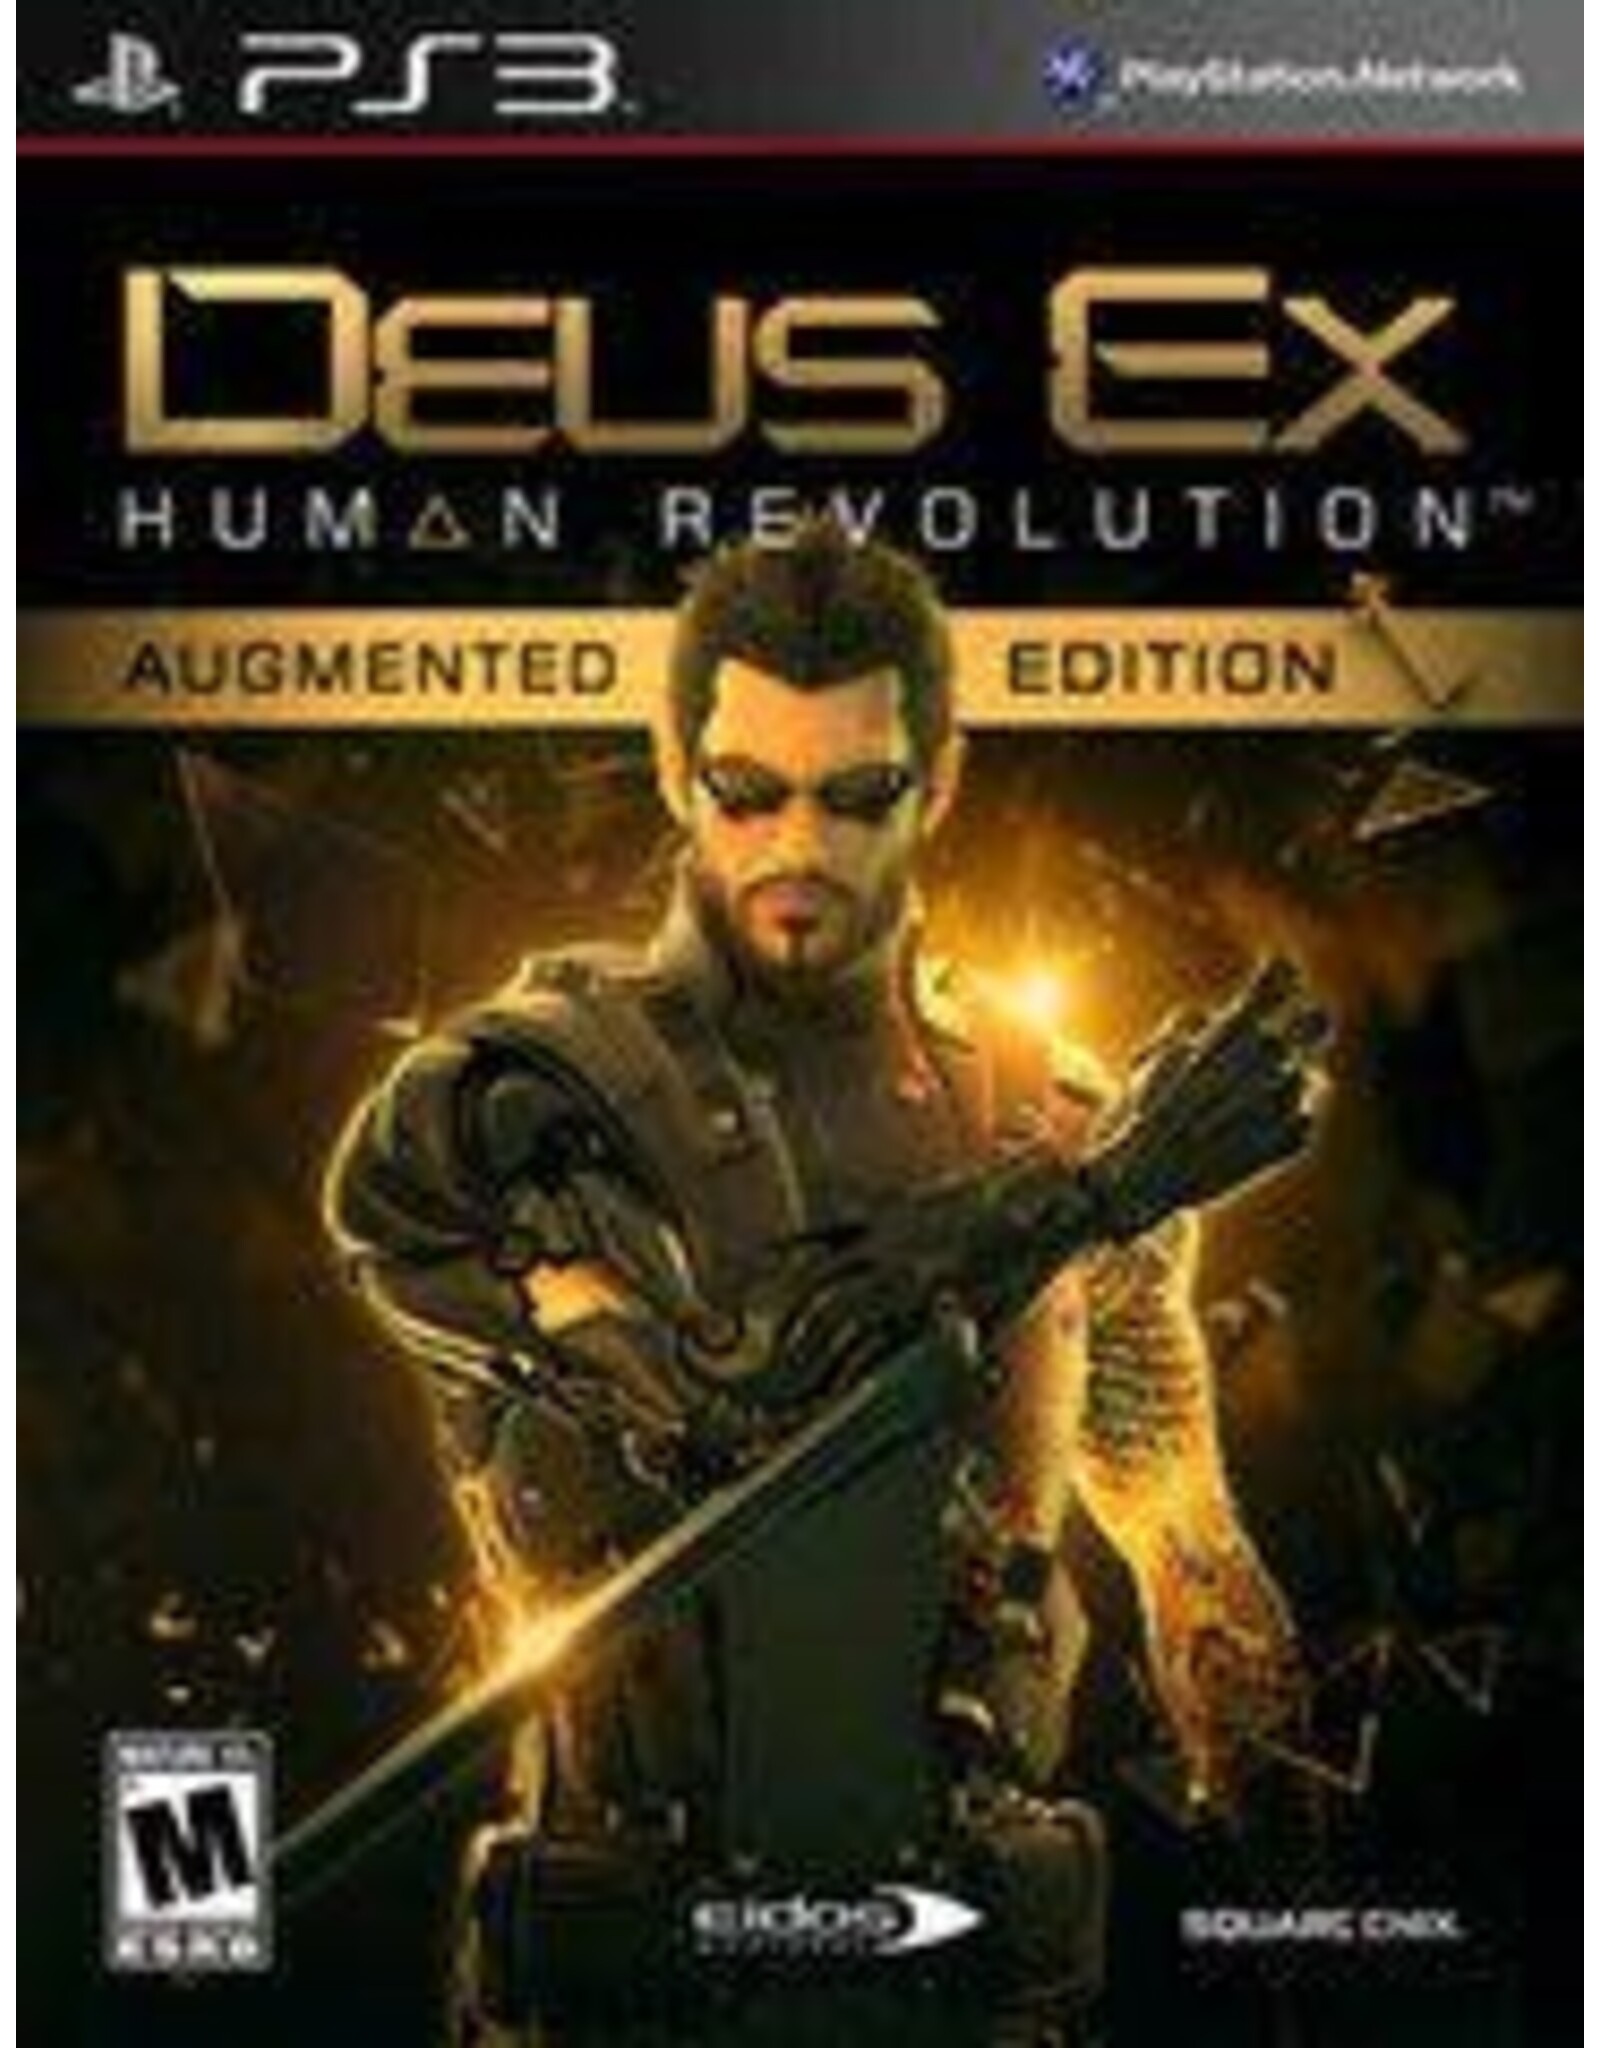 Playstation 3 Deus Ex: Human Revolution Augmented Edition (CiB)